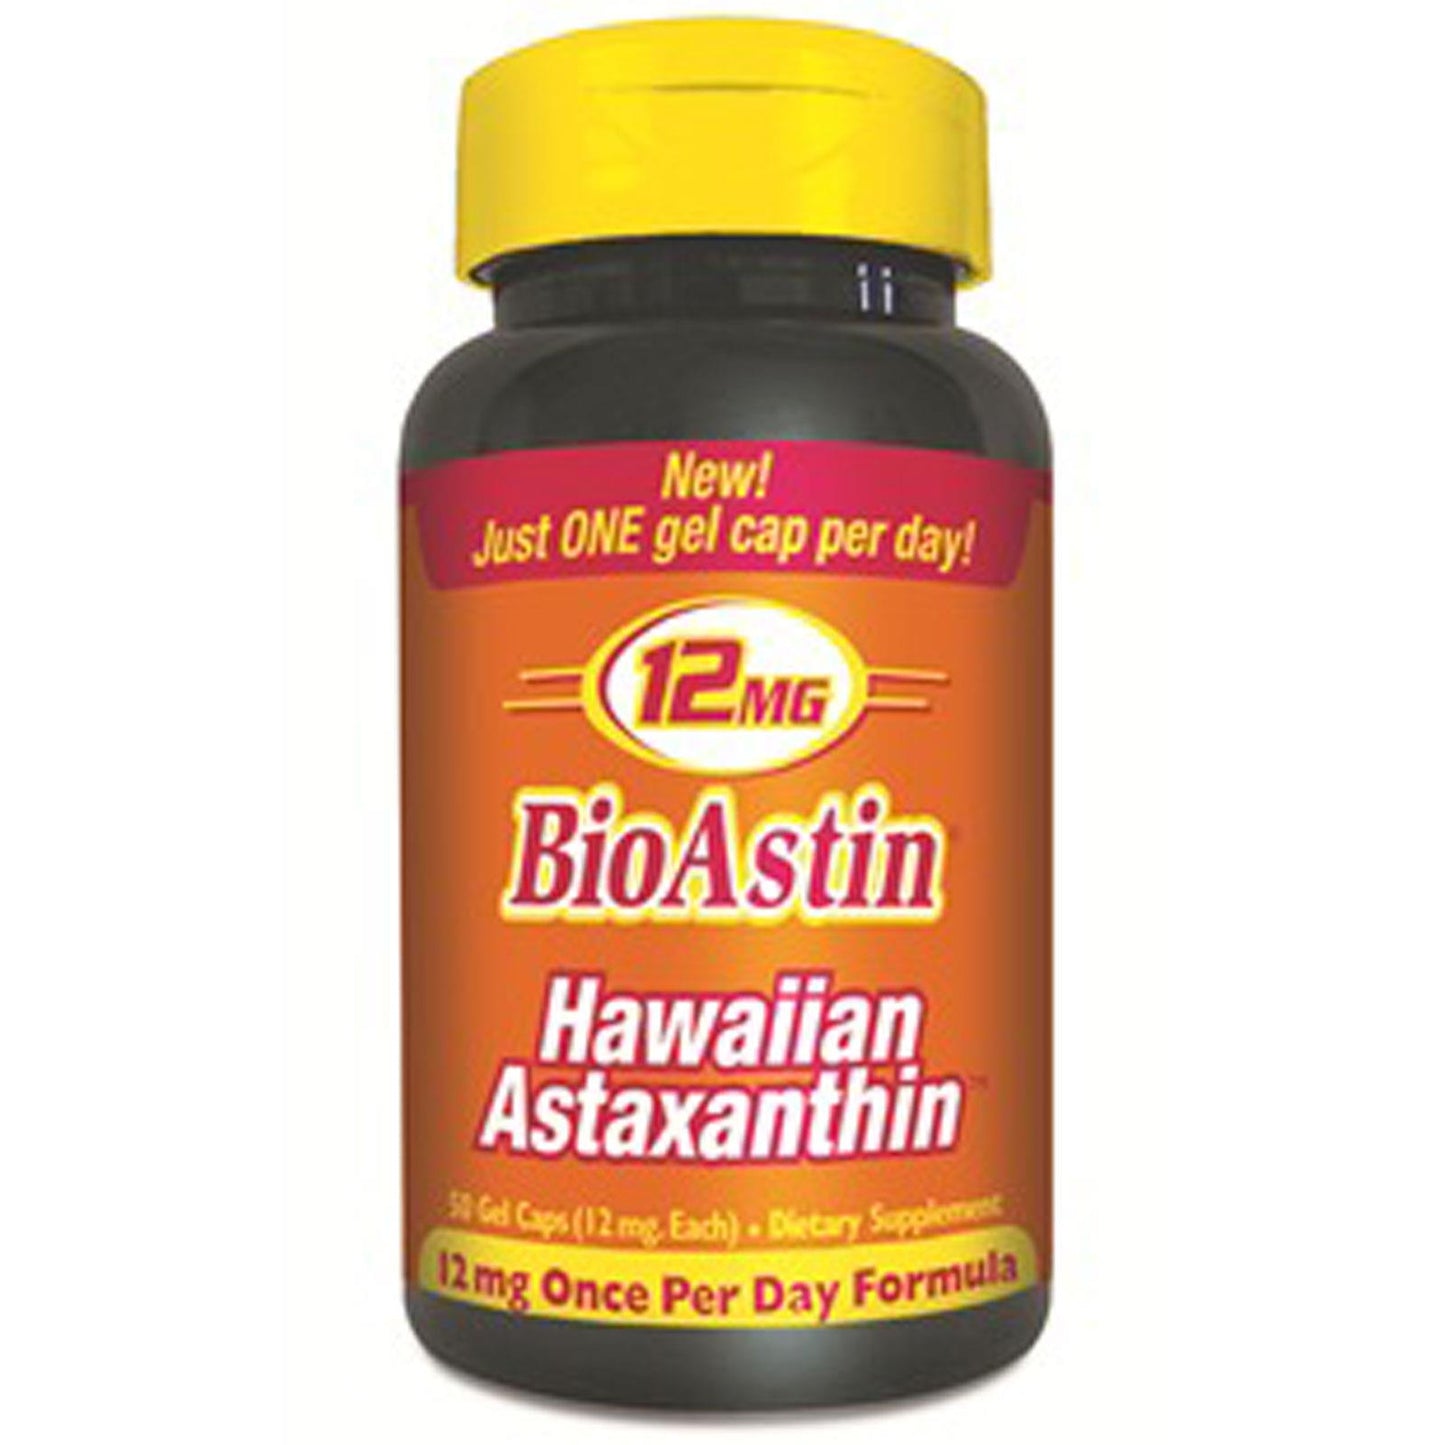 BioAstin Astaxanthin 12mg 50 Gel Caps